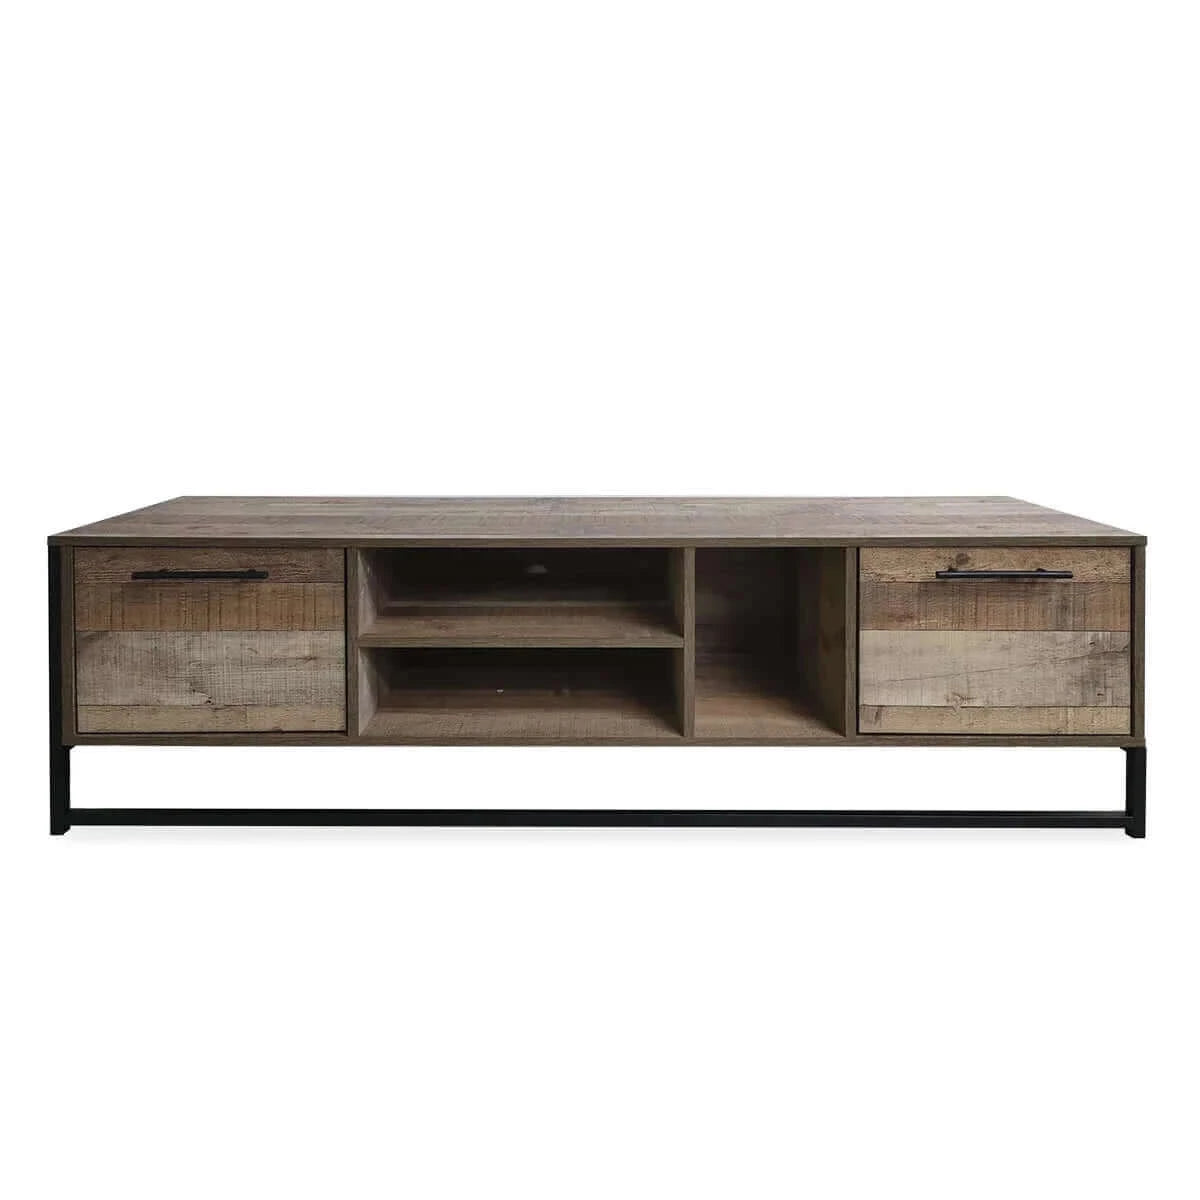 Buy home master vogue wood tone tv unit stylish rustic flawless design 160cm - upinteriors-Upinteriors